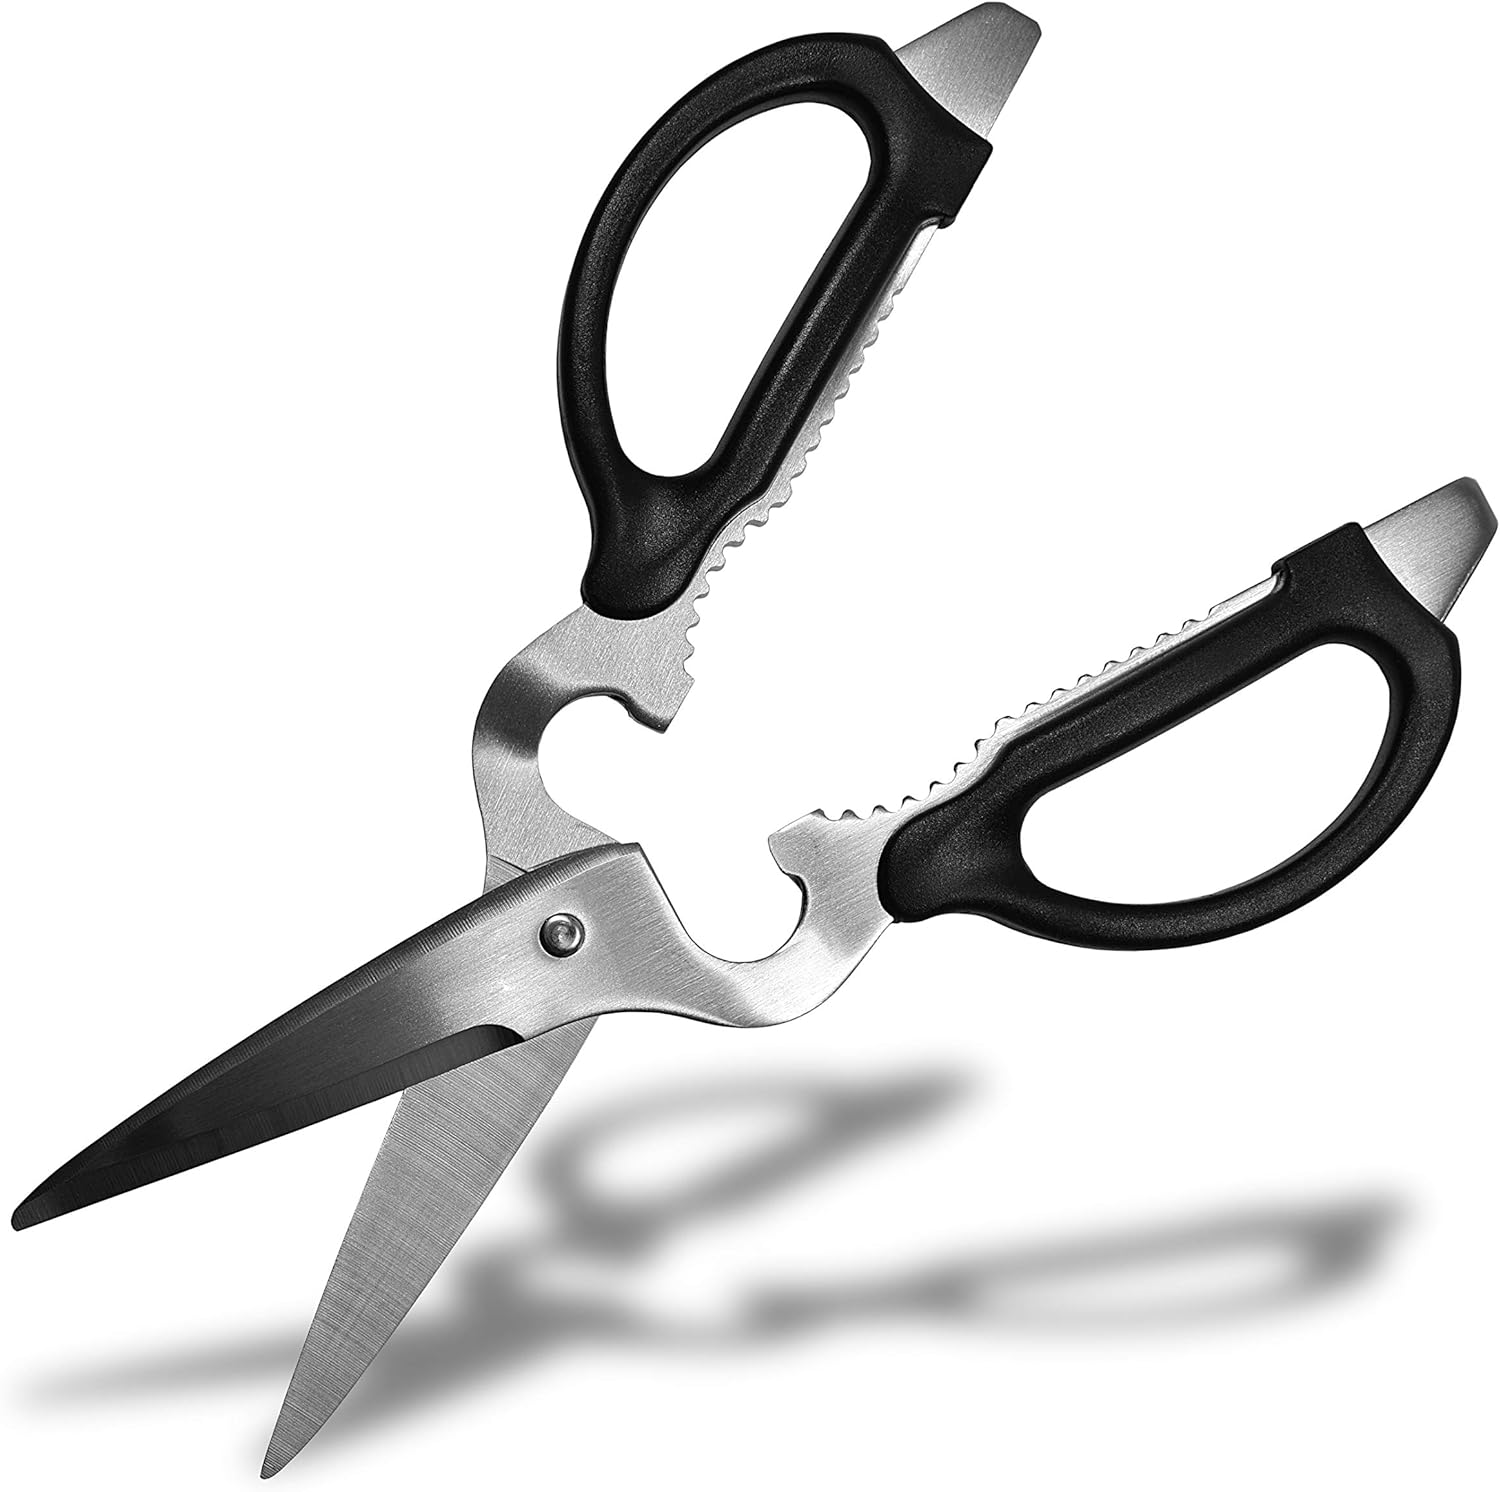 Seki Japan Kitchen Scissors Review